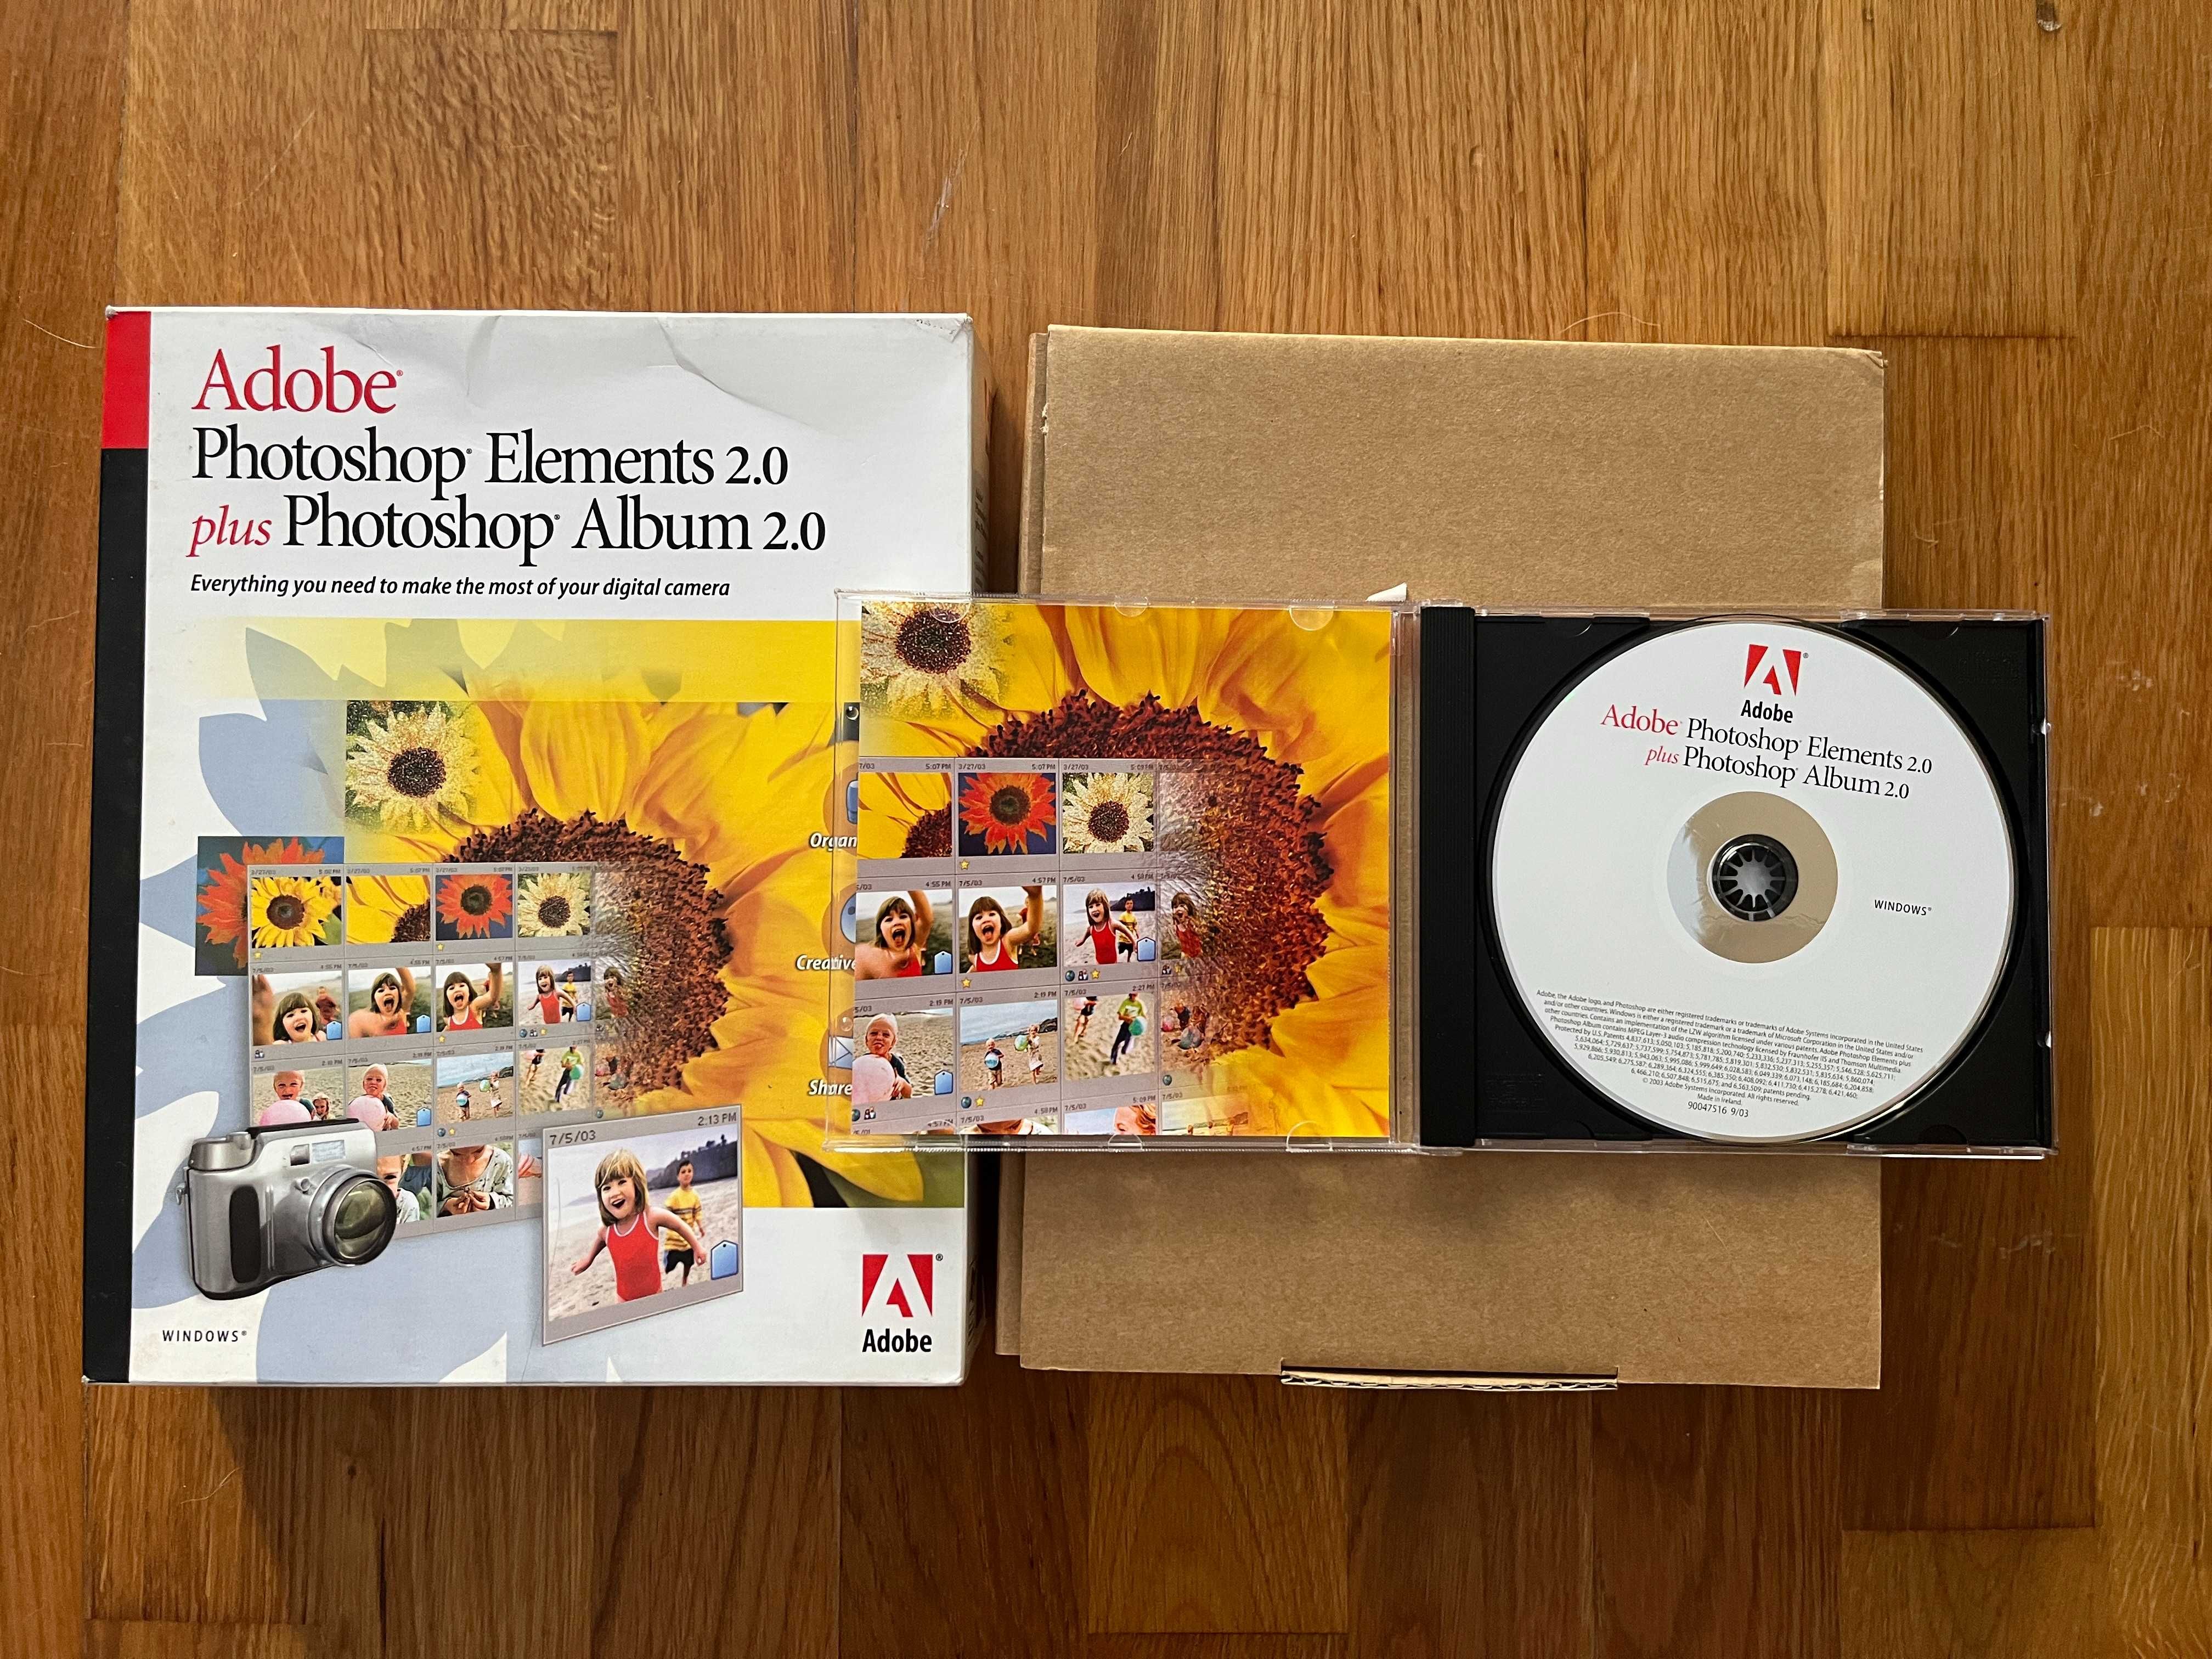 CD - Adobe Photoshop Elements 2.0 plus Photoshop Album 2.0